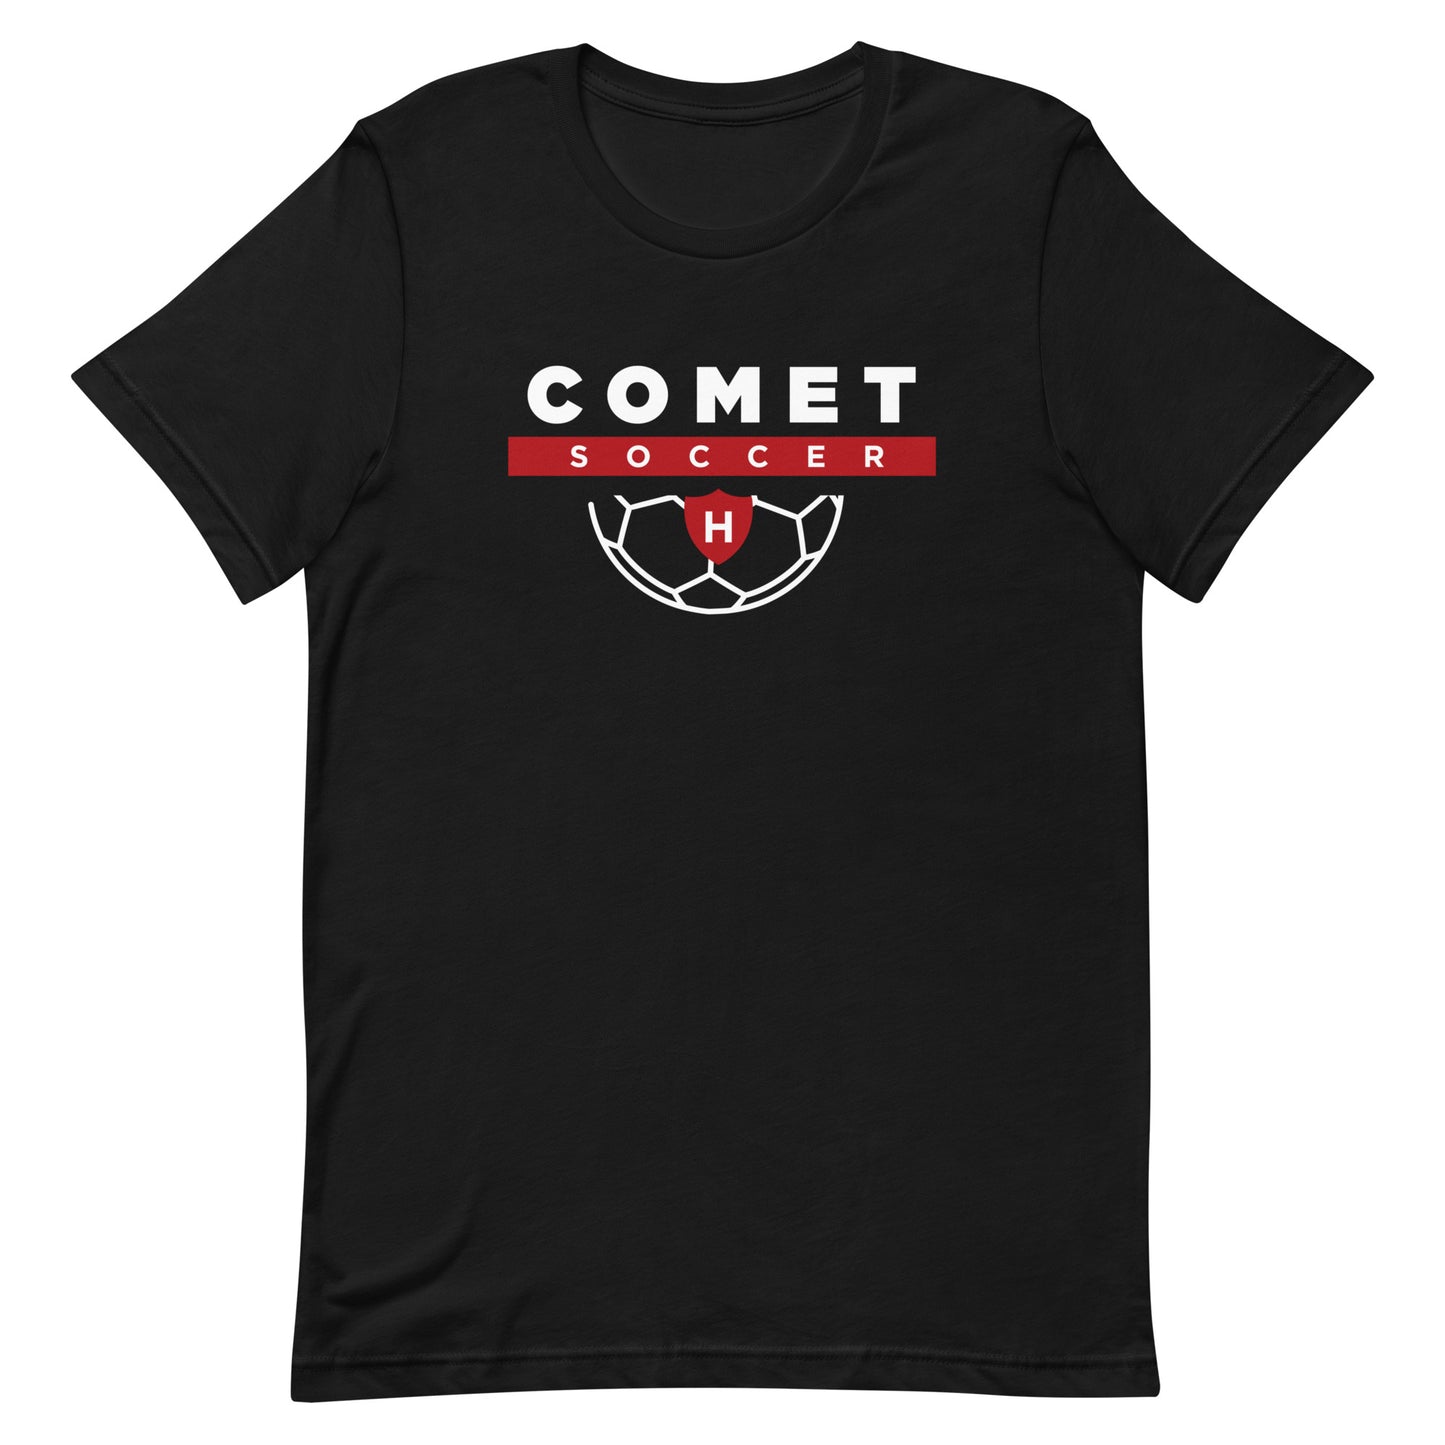 Comet Soccer - Personalized Unisex t-shirt